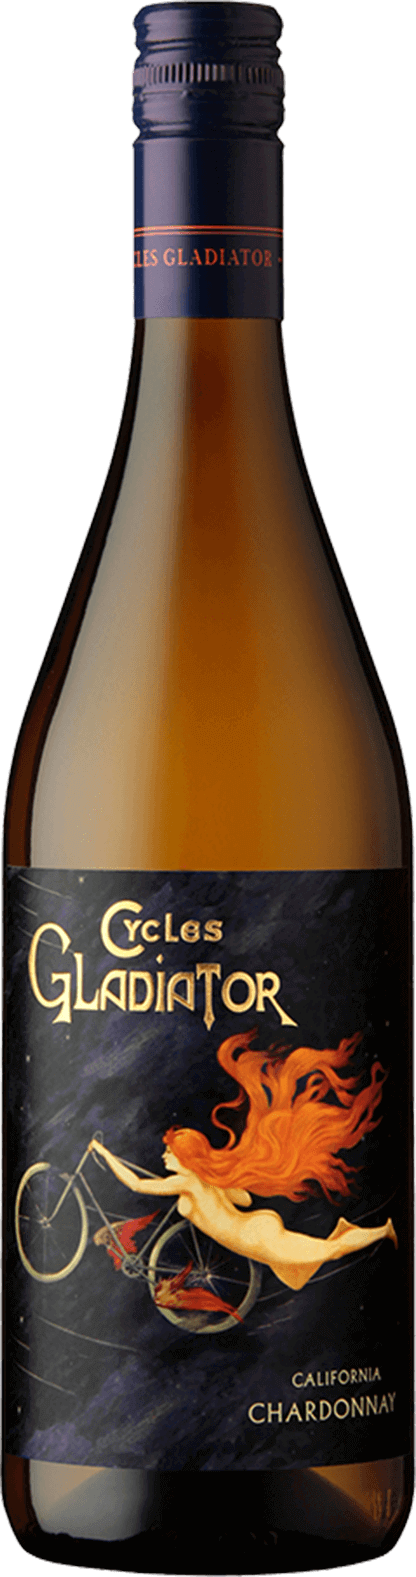 Chardonnay Cycles Gladiator bottle